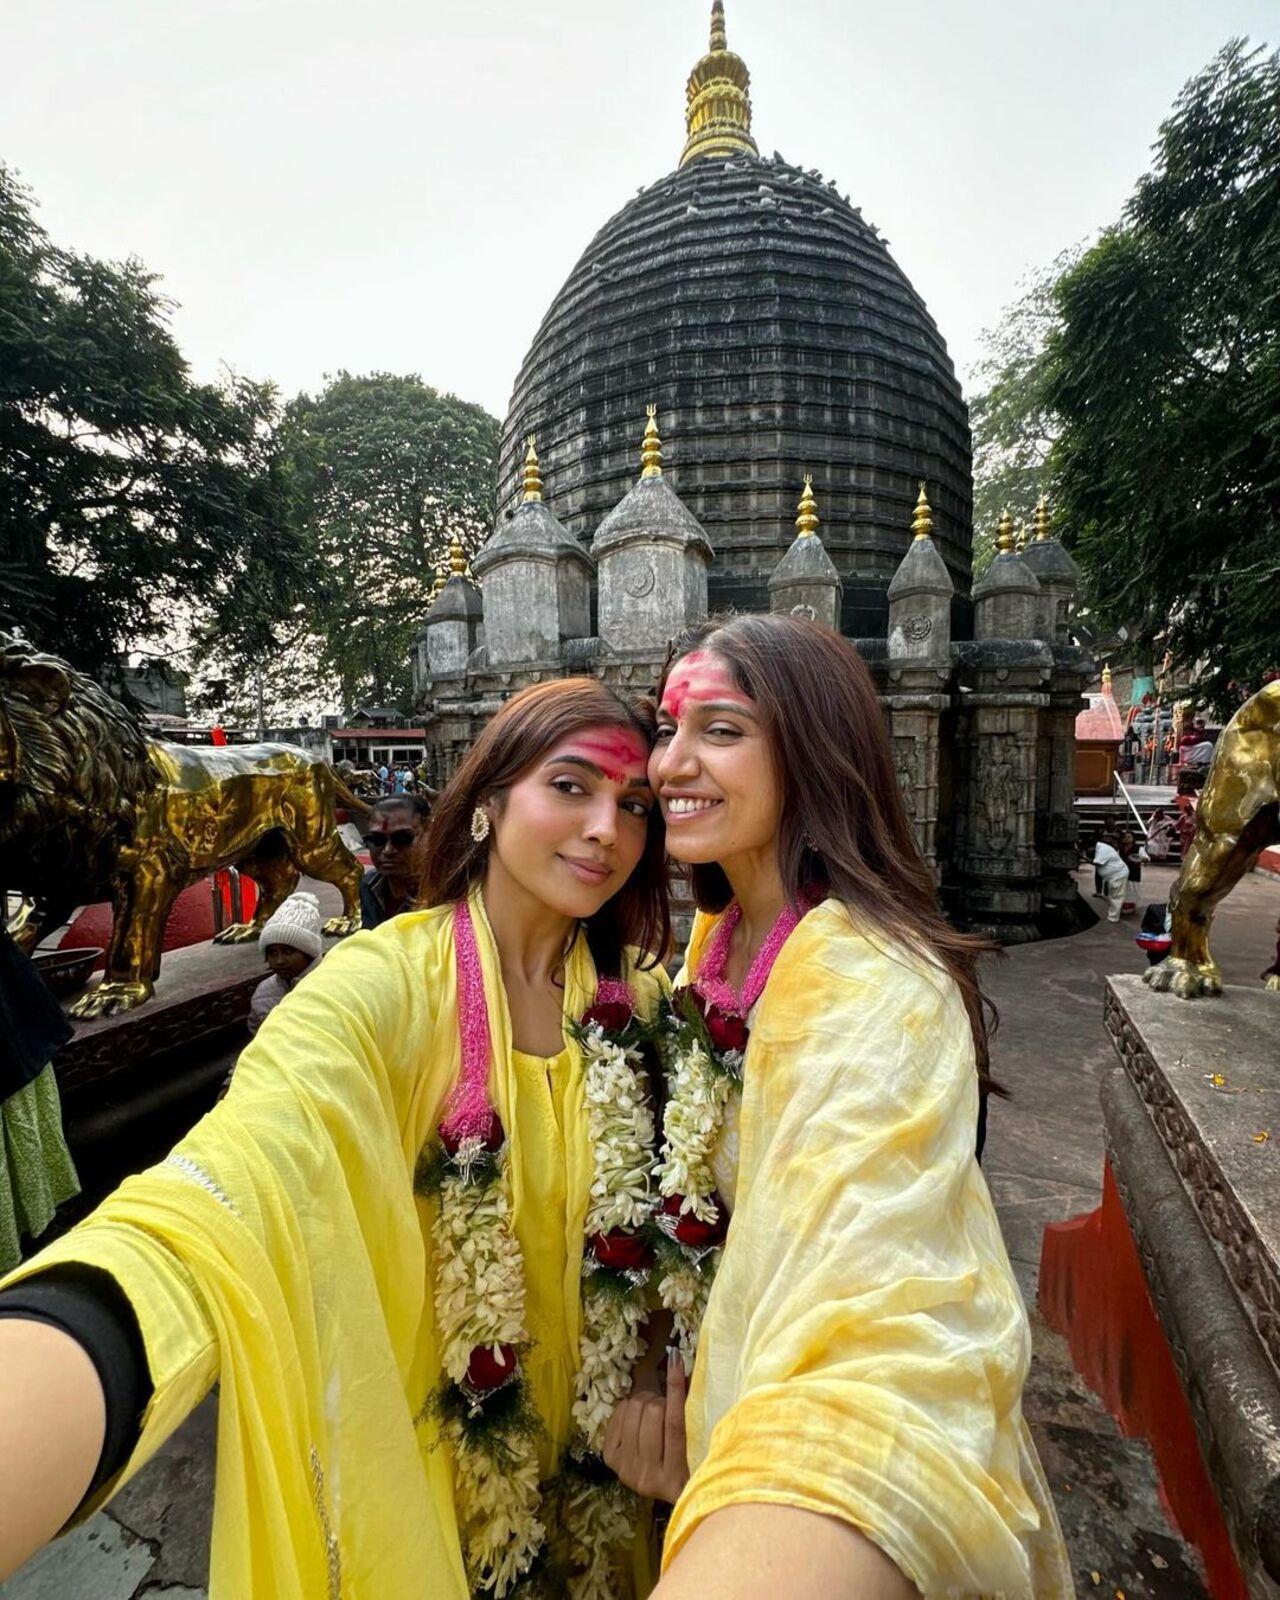 After Tamannaah Bhatia, actress Bhumi Pednekar along with her sister Samiksha Pednekar also visited the temple in Guwahati